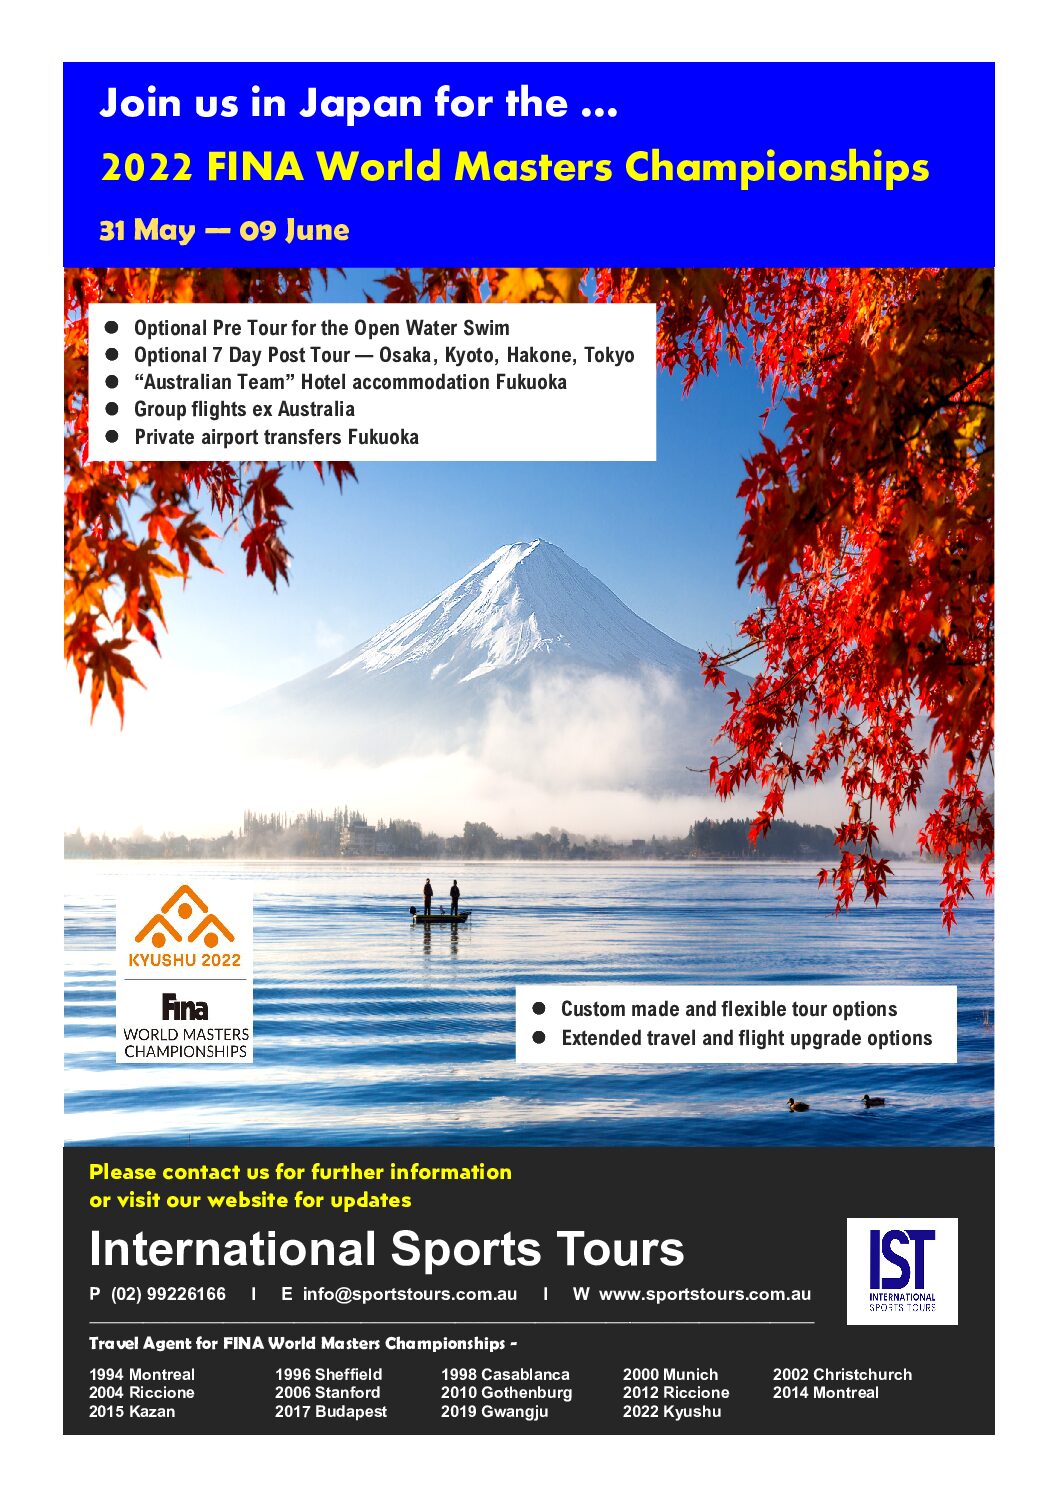 FINA Japan International Sports Tours